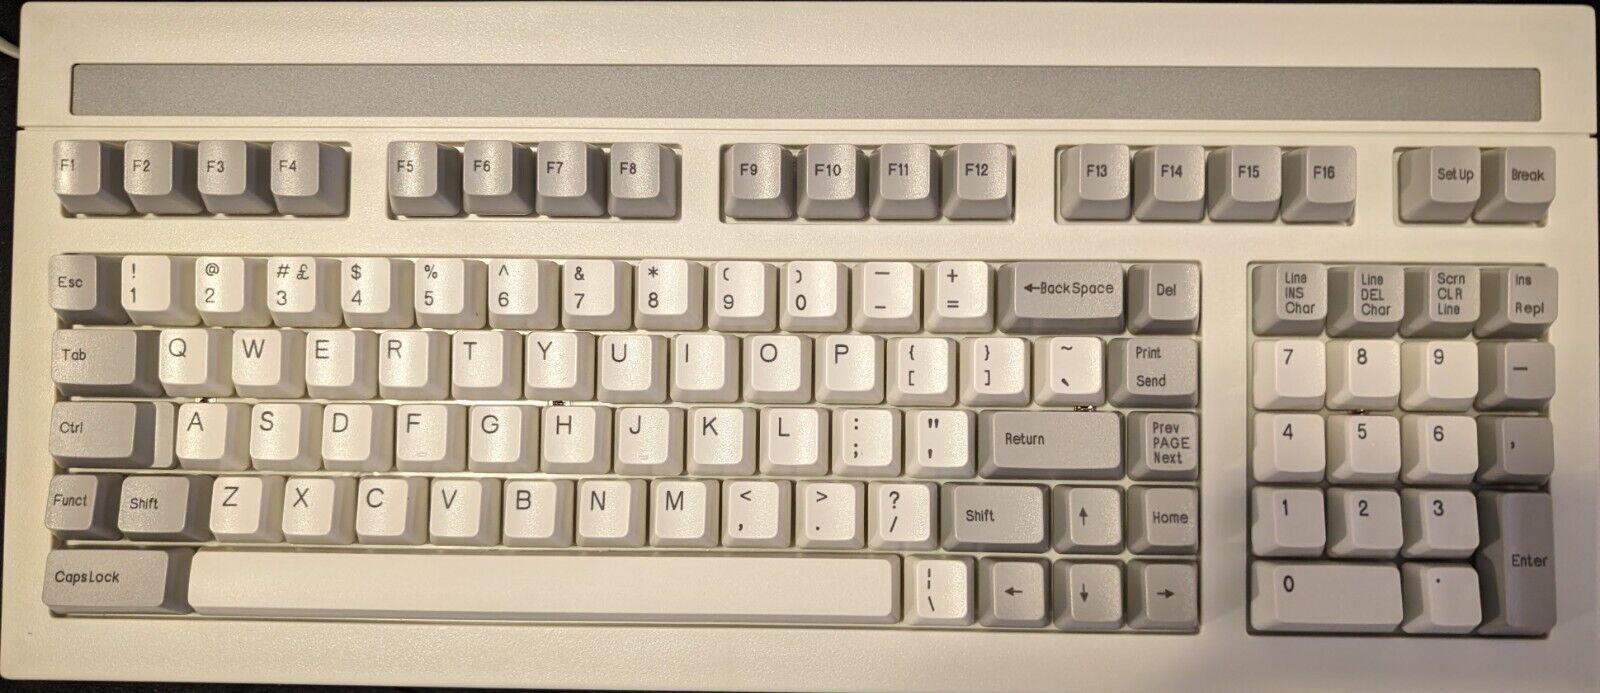 NEW Wyse ASCII Keyboard 901867-01 Mechanical Terminal Computer Keyboard